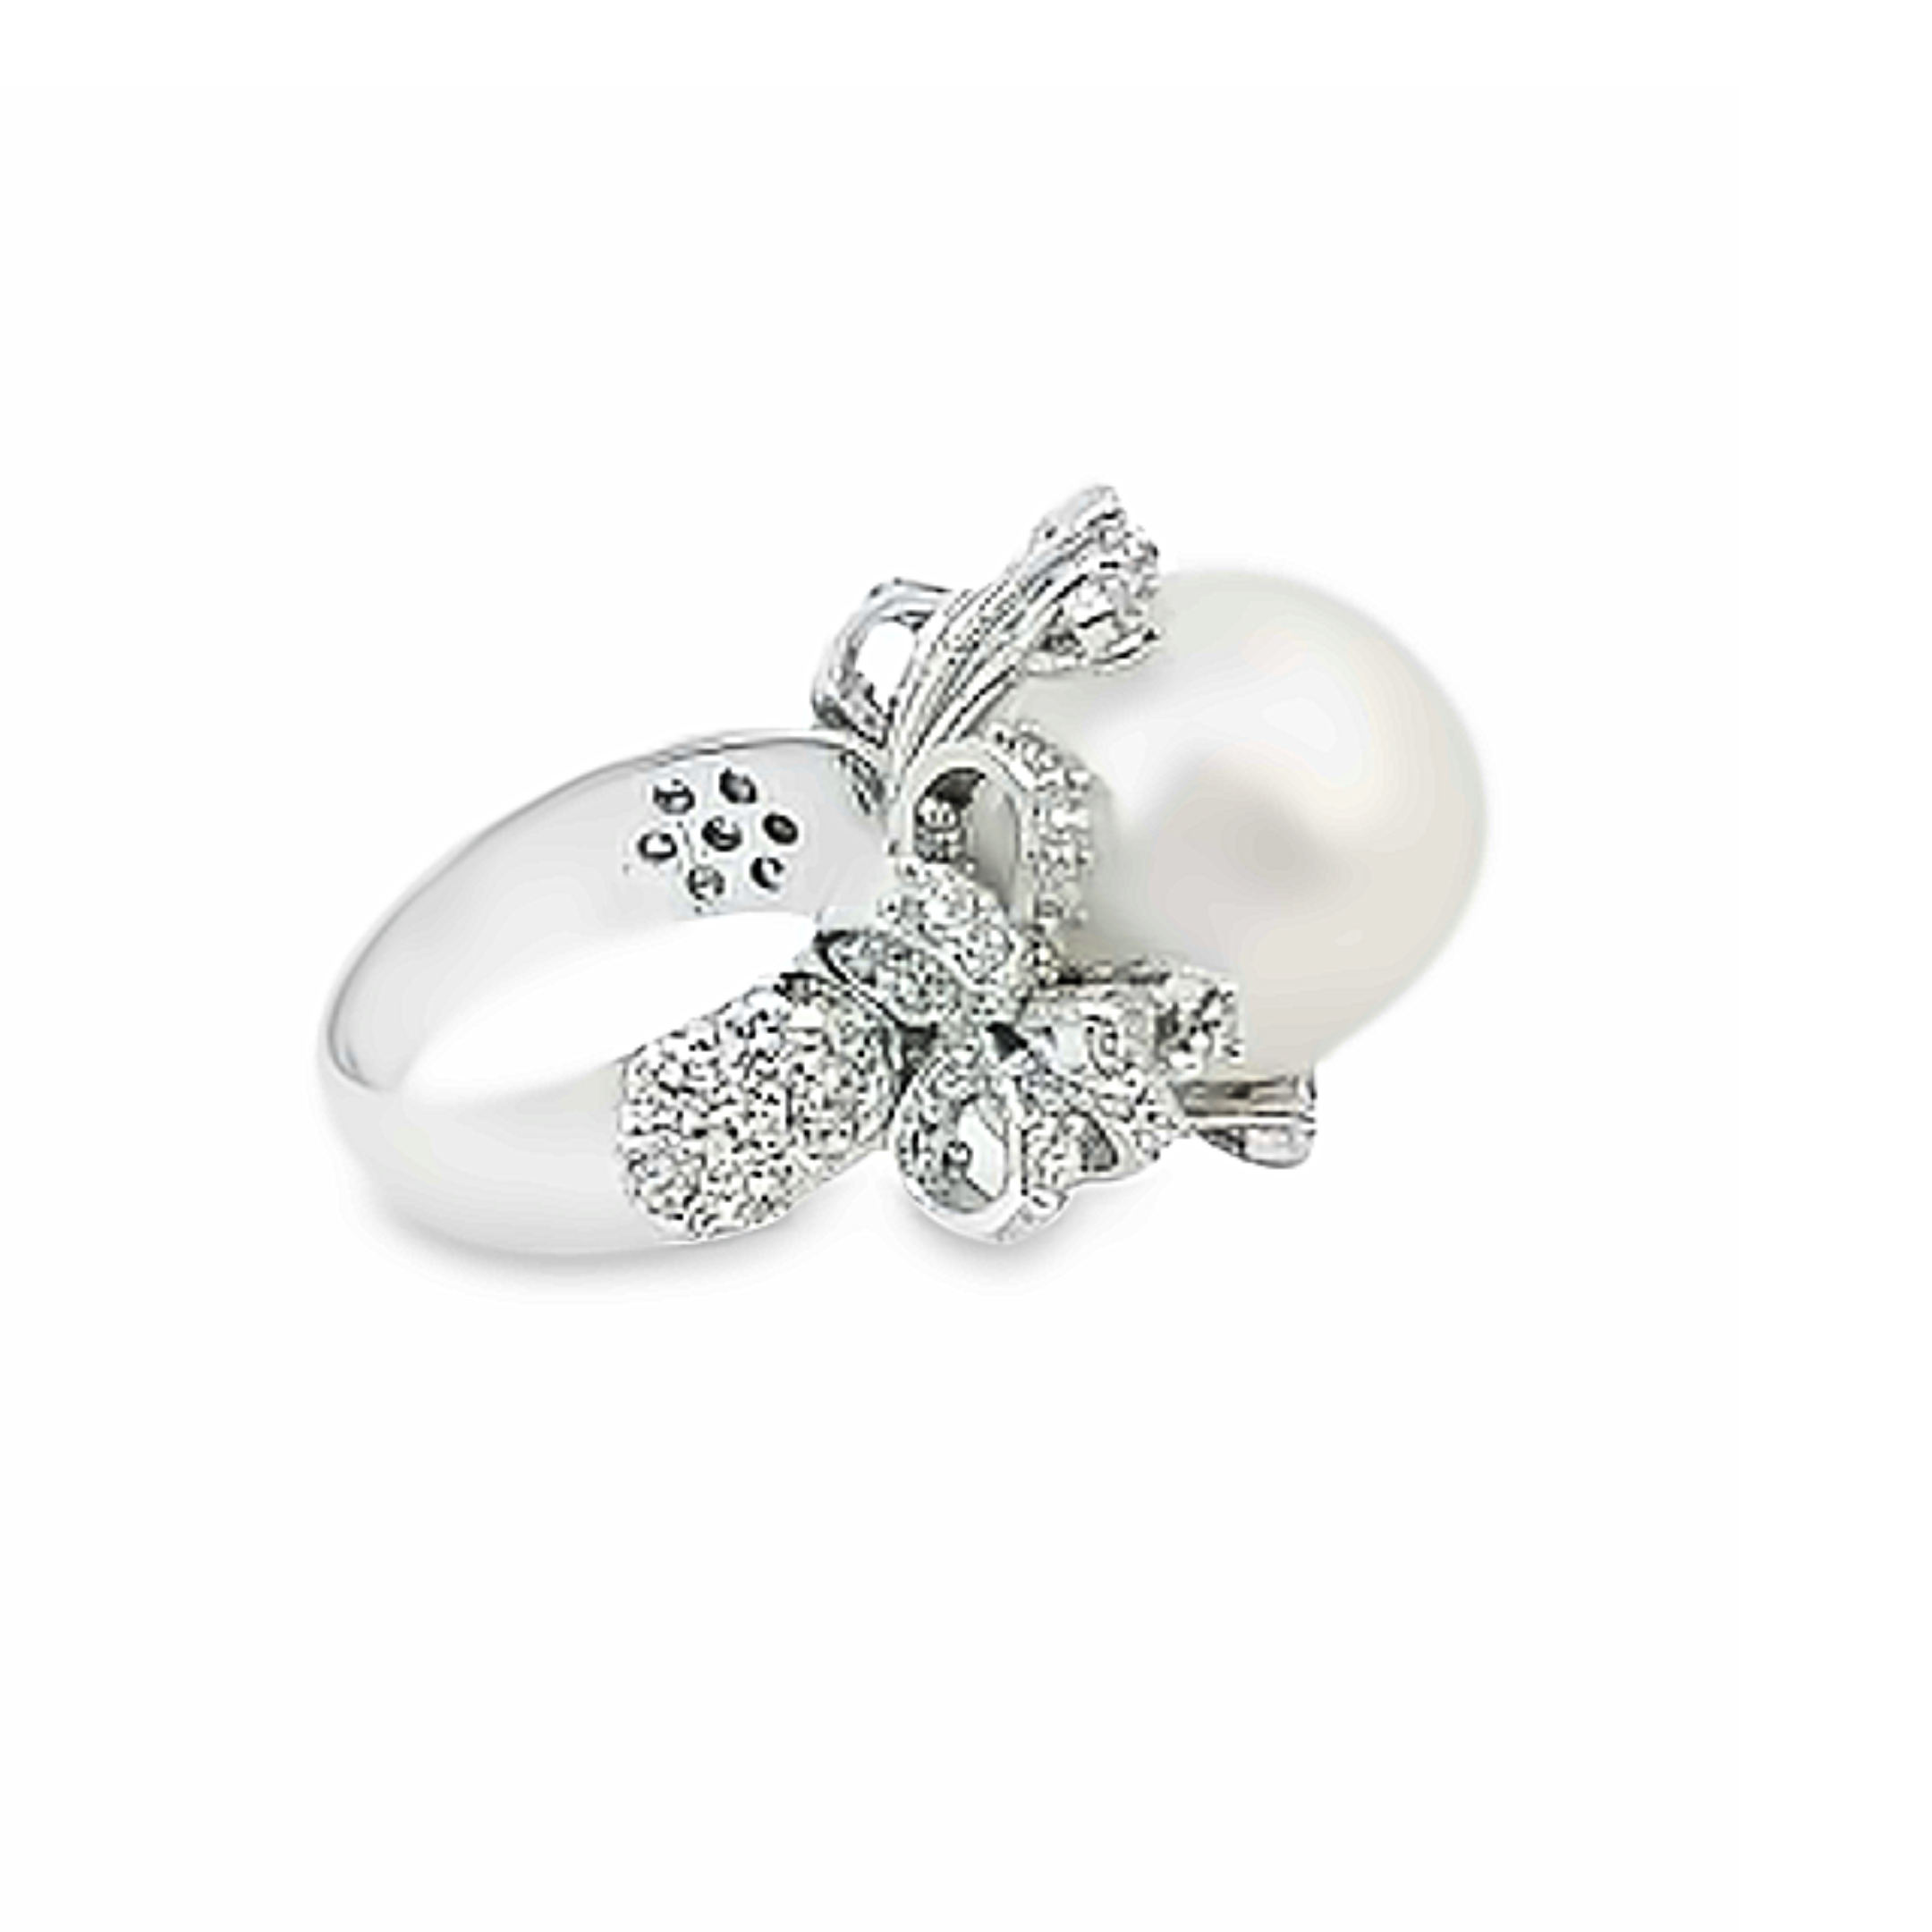 14k White Gold Diamond And Round Fresh Water Pearl Engagement Ring 2.50c